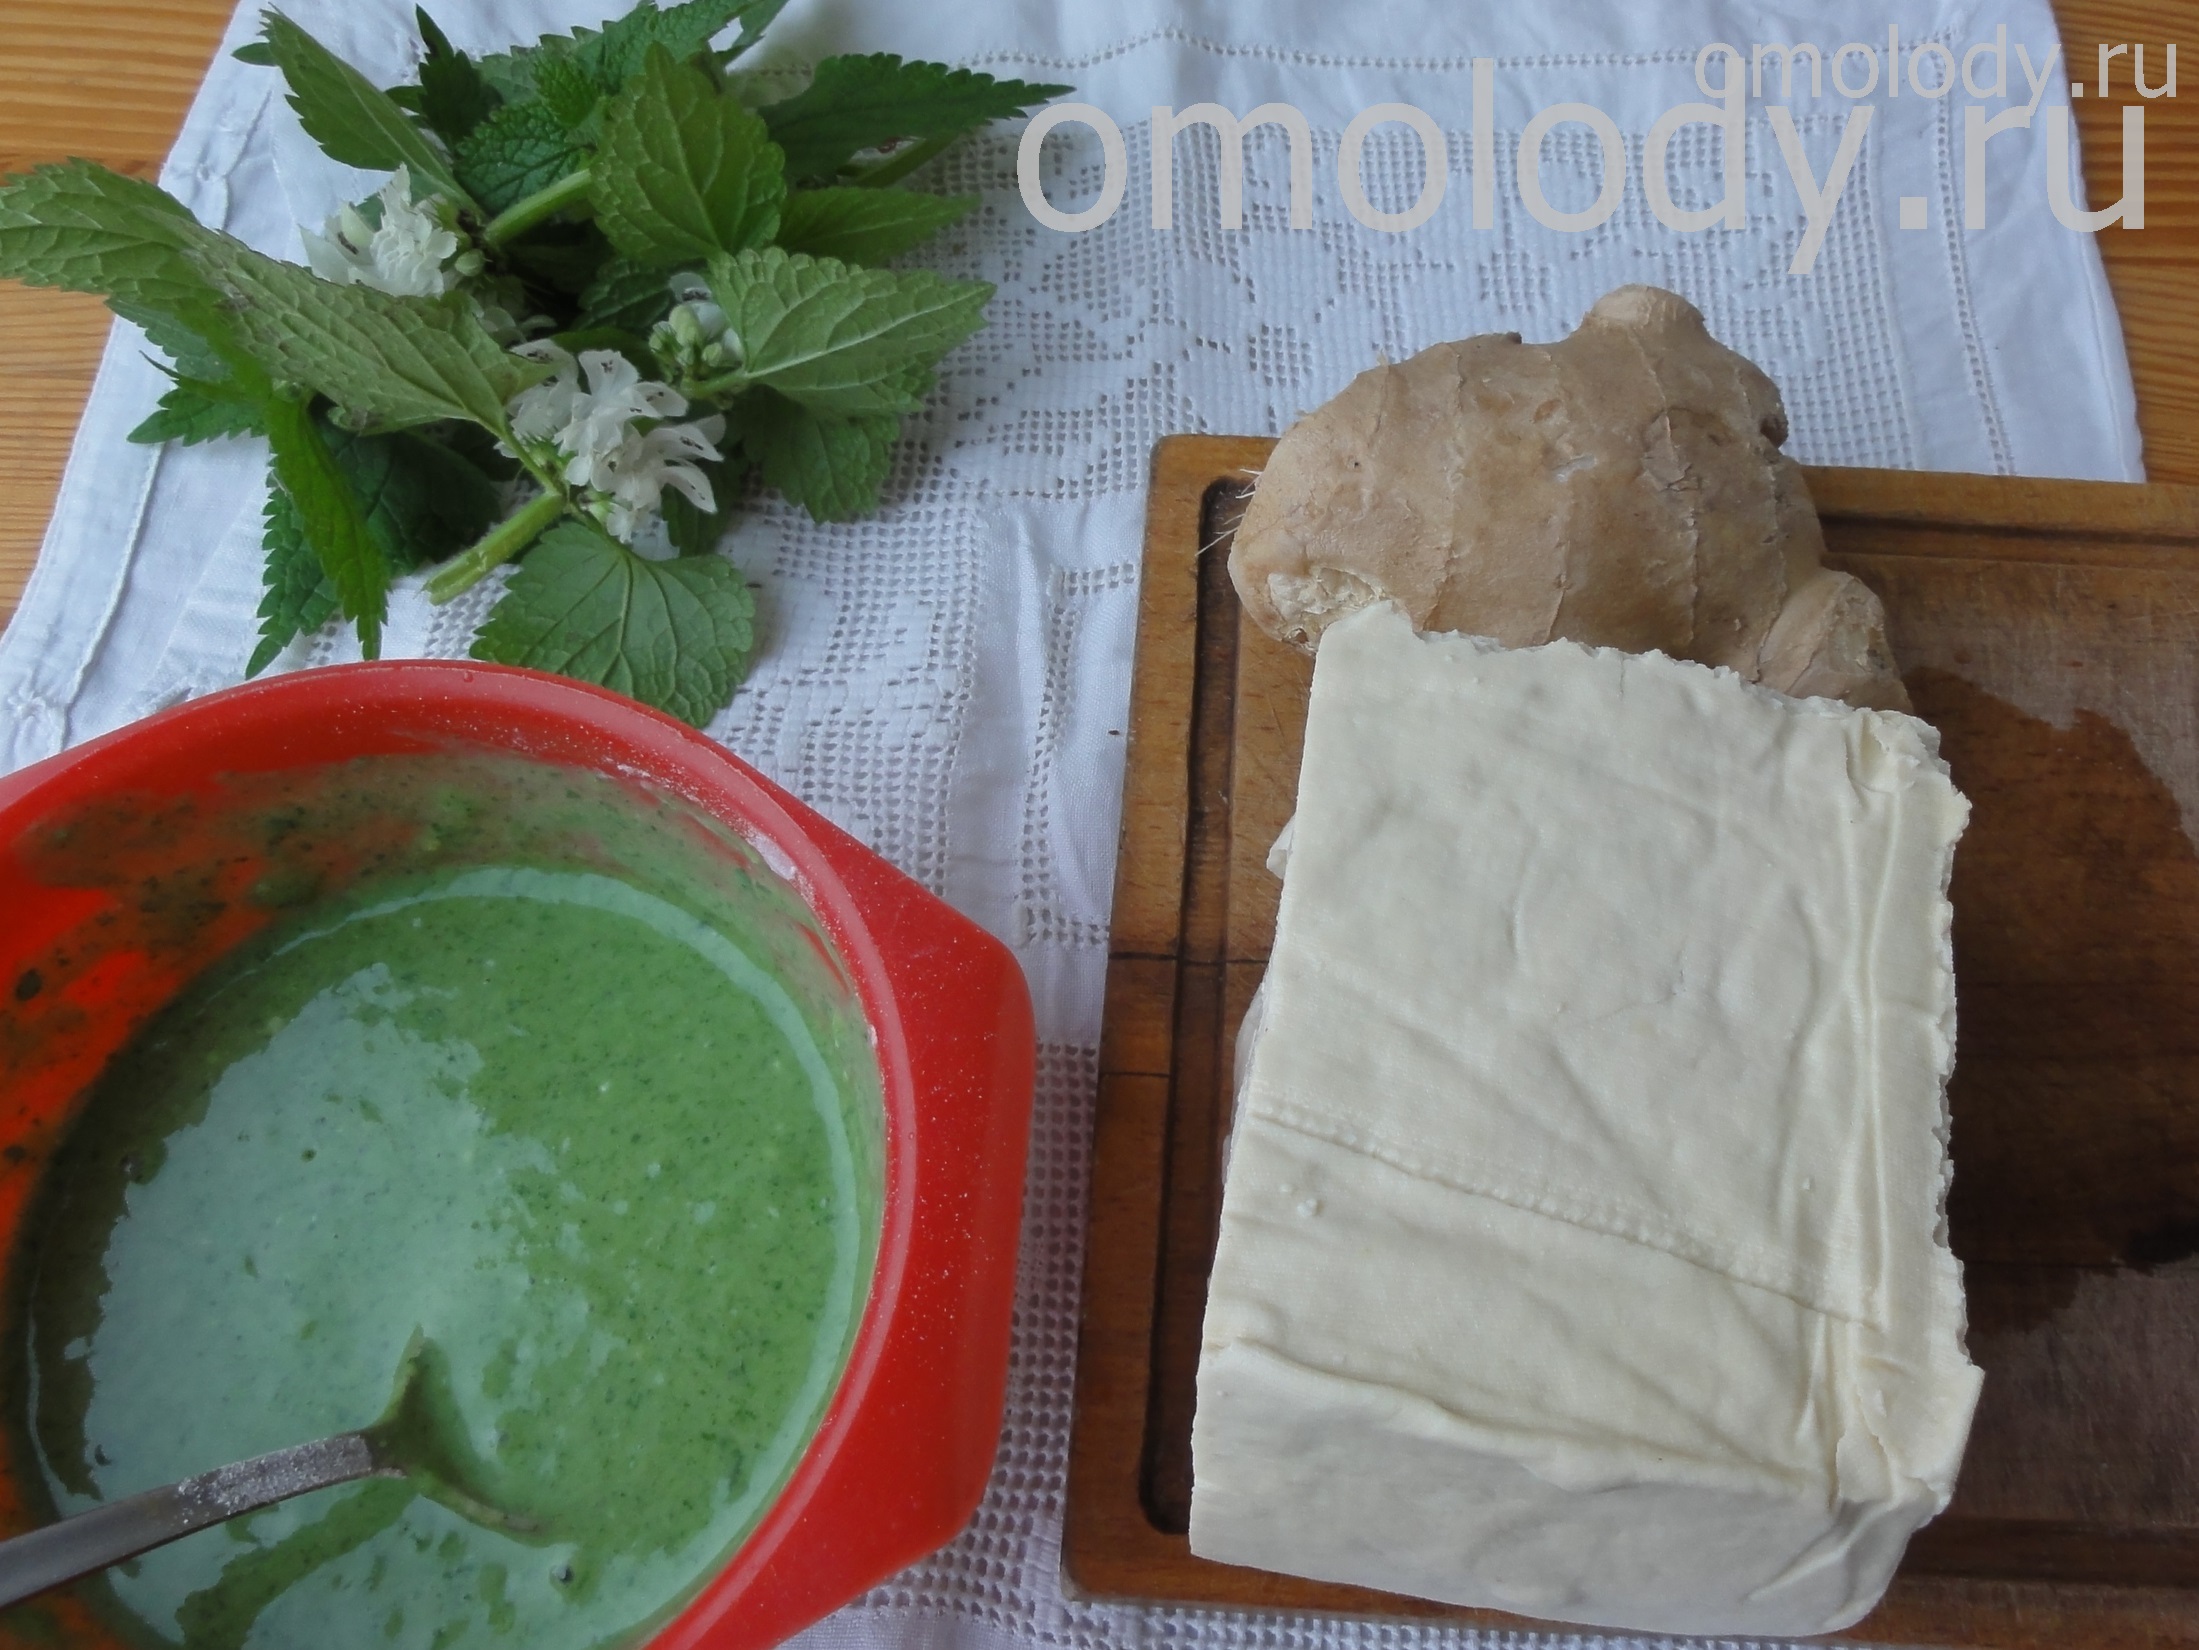 Тофу в зеленом кляре с глухой крапивой